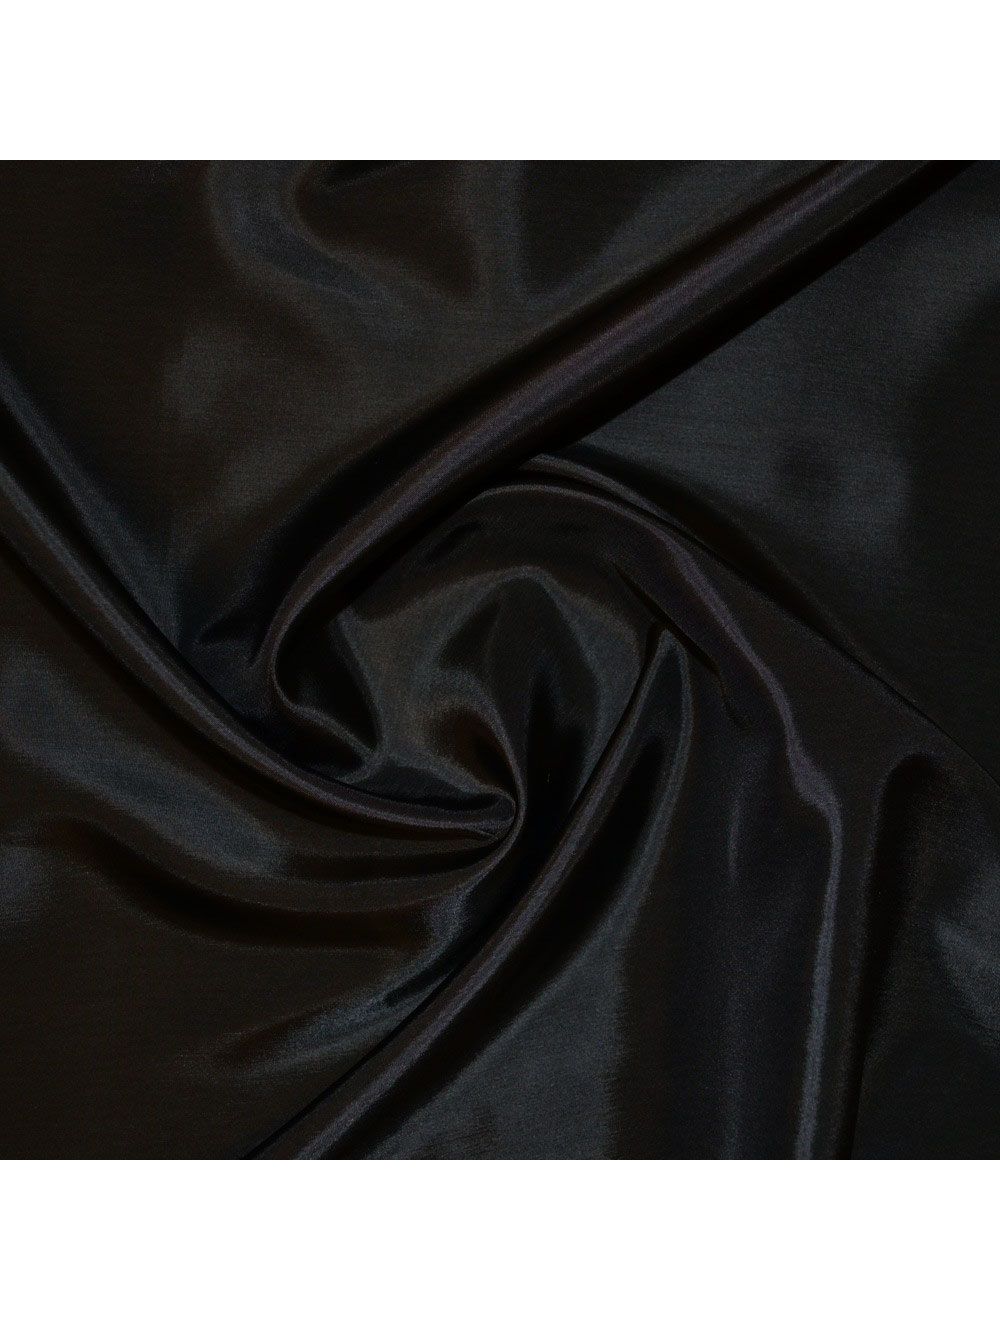 Black Bemberg Cupro Dress Lining Fabric | Dress Lining | Calico Laine